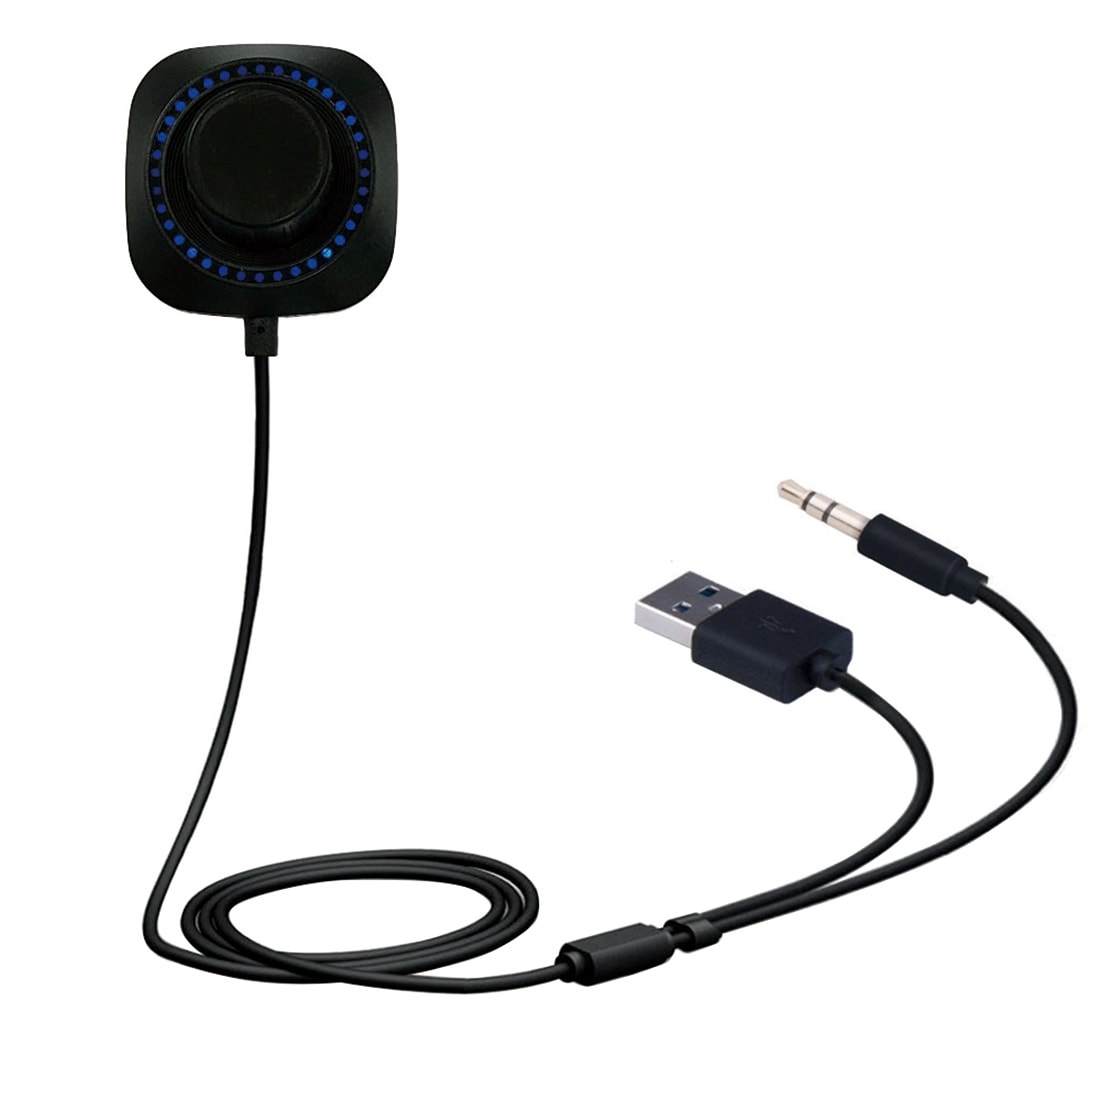 Bil Bluetooth 4.1 mottagare - Mic & LED till iPhone